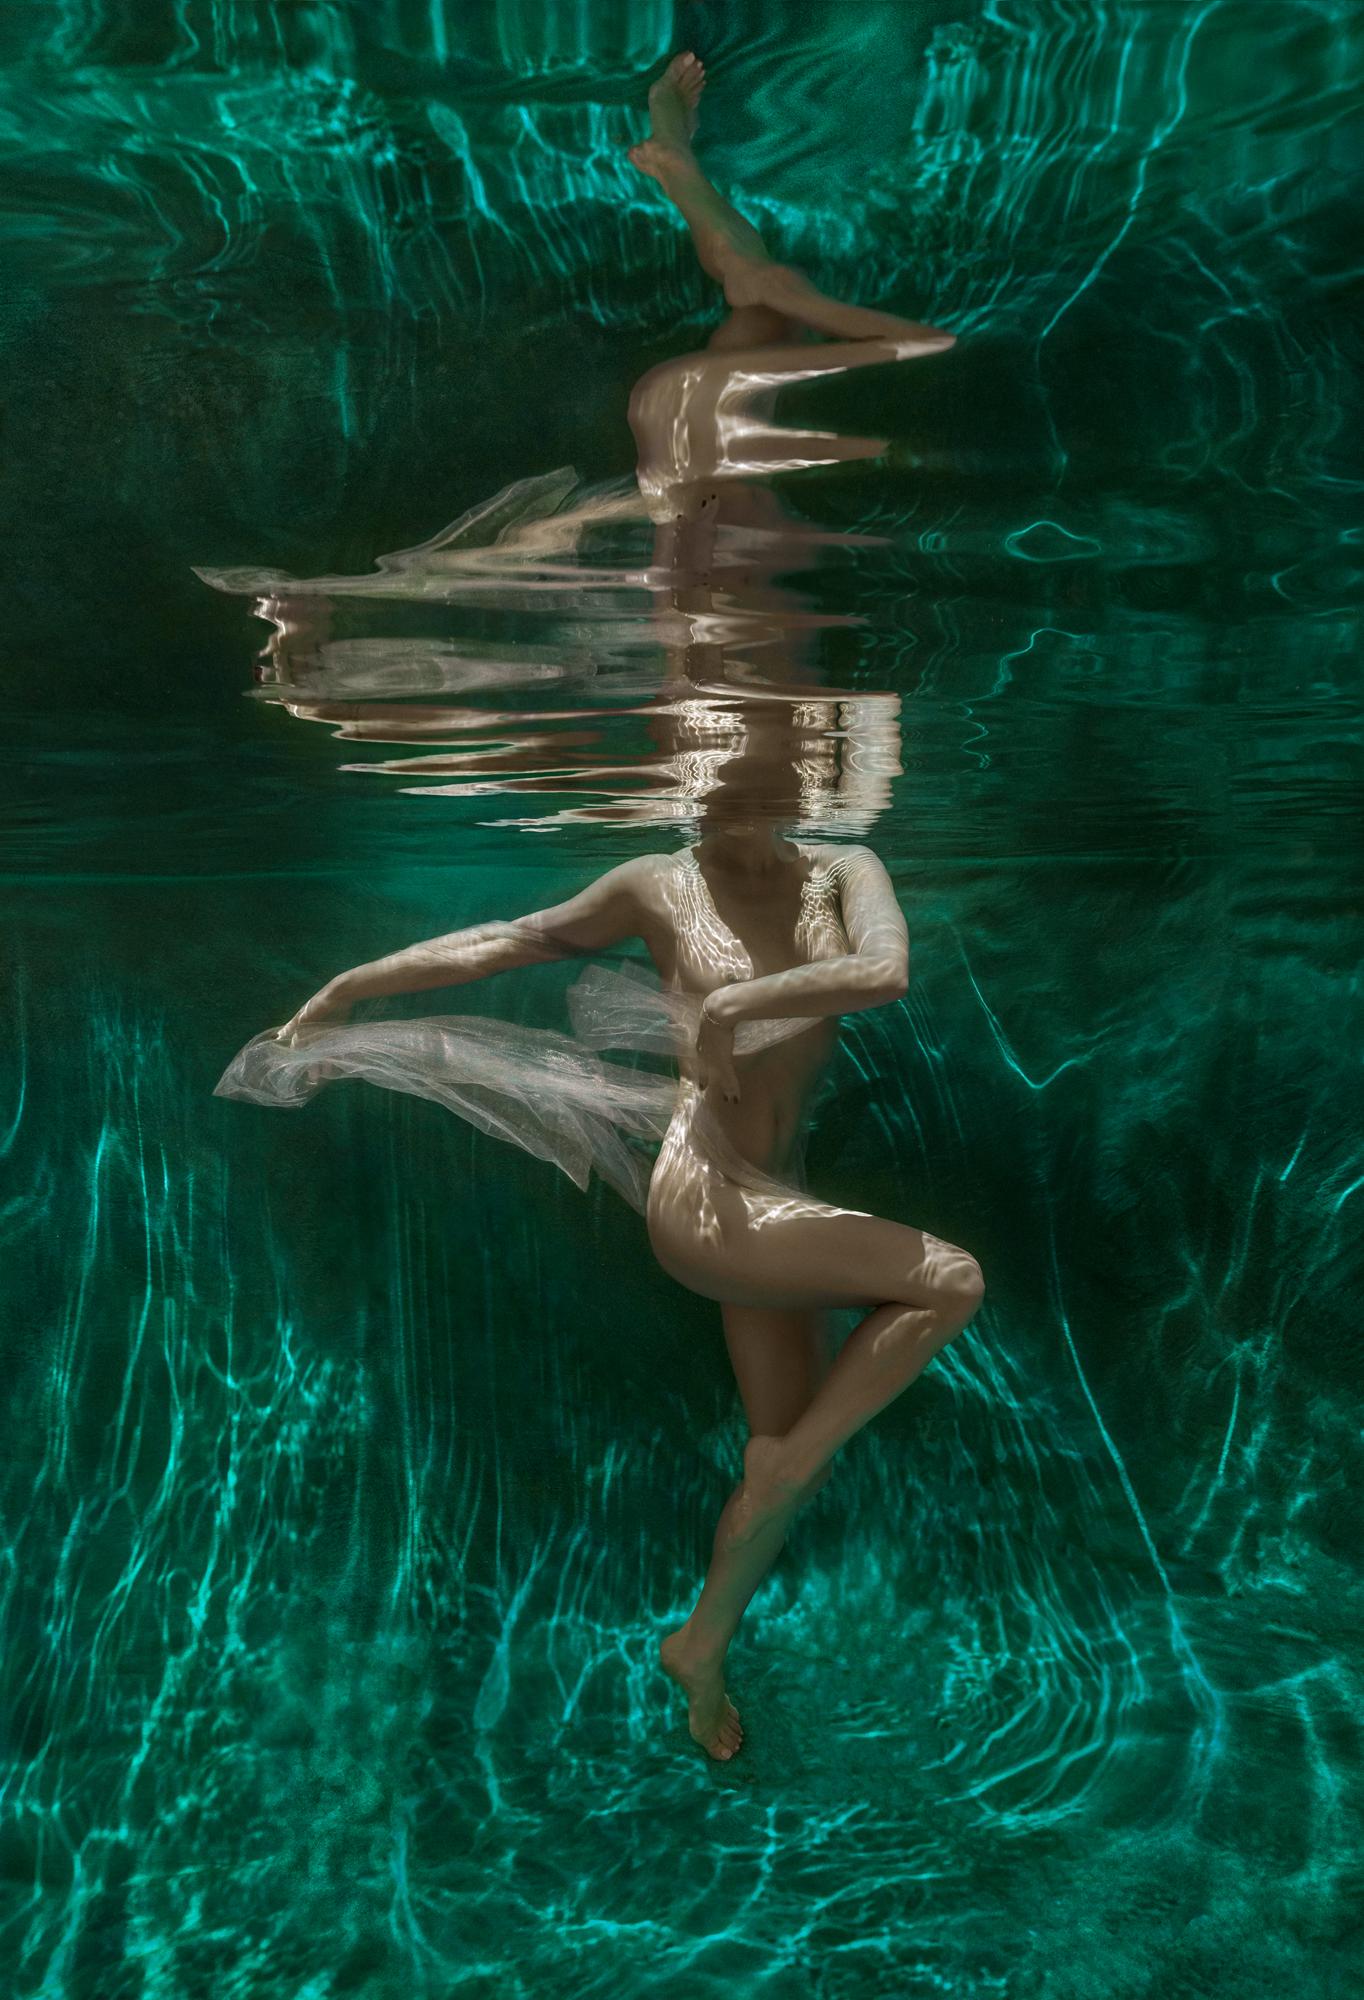 Alex Sher Nude Photograph - Мalachite Cave - underwater photograph - archival pigment print 24x18"